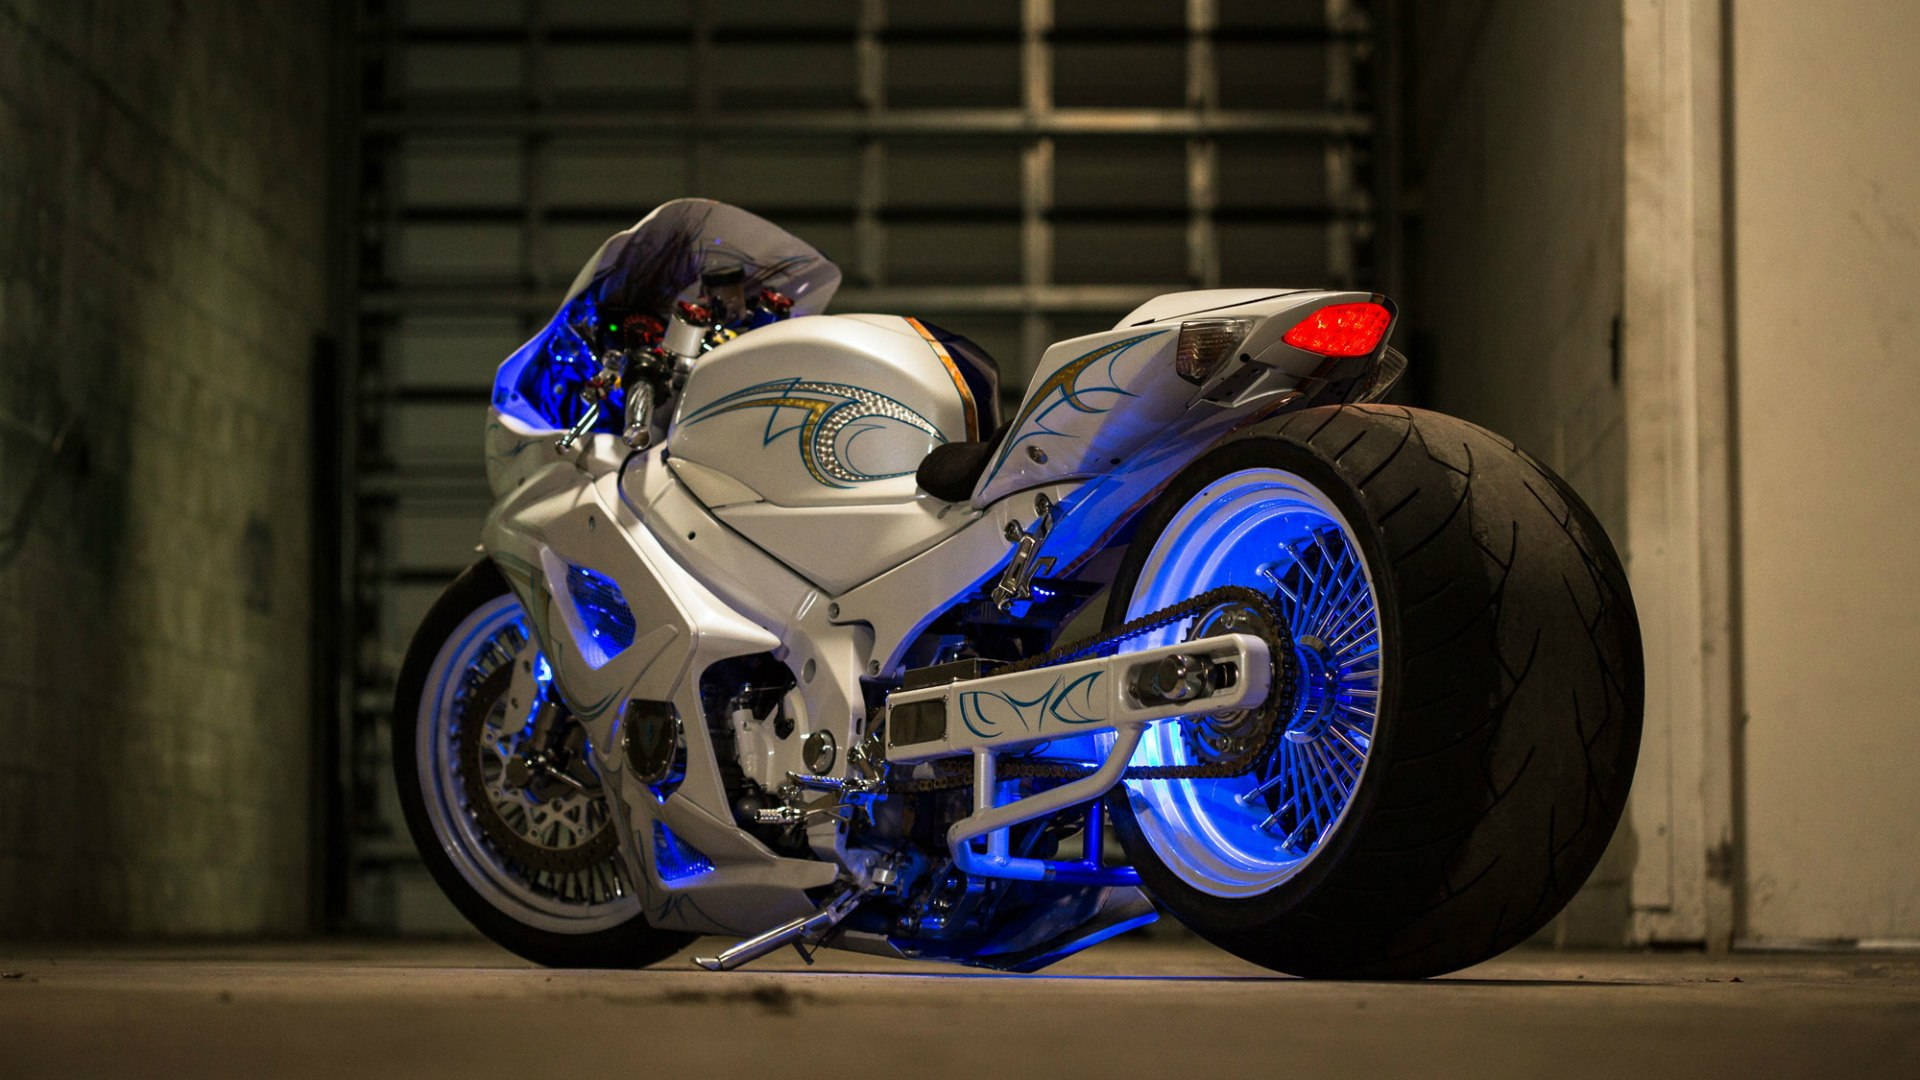 Suzuki Racing Motorcycle Background